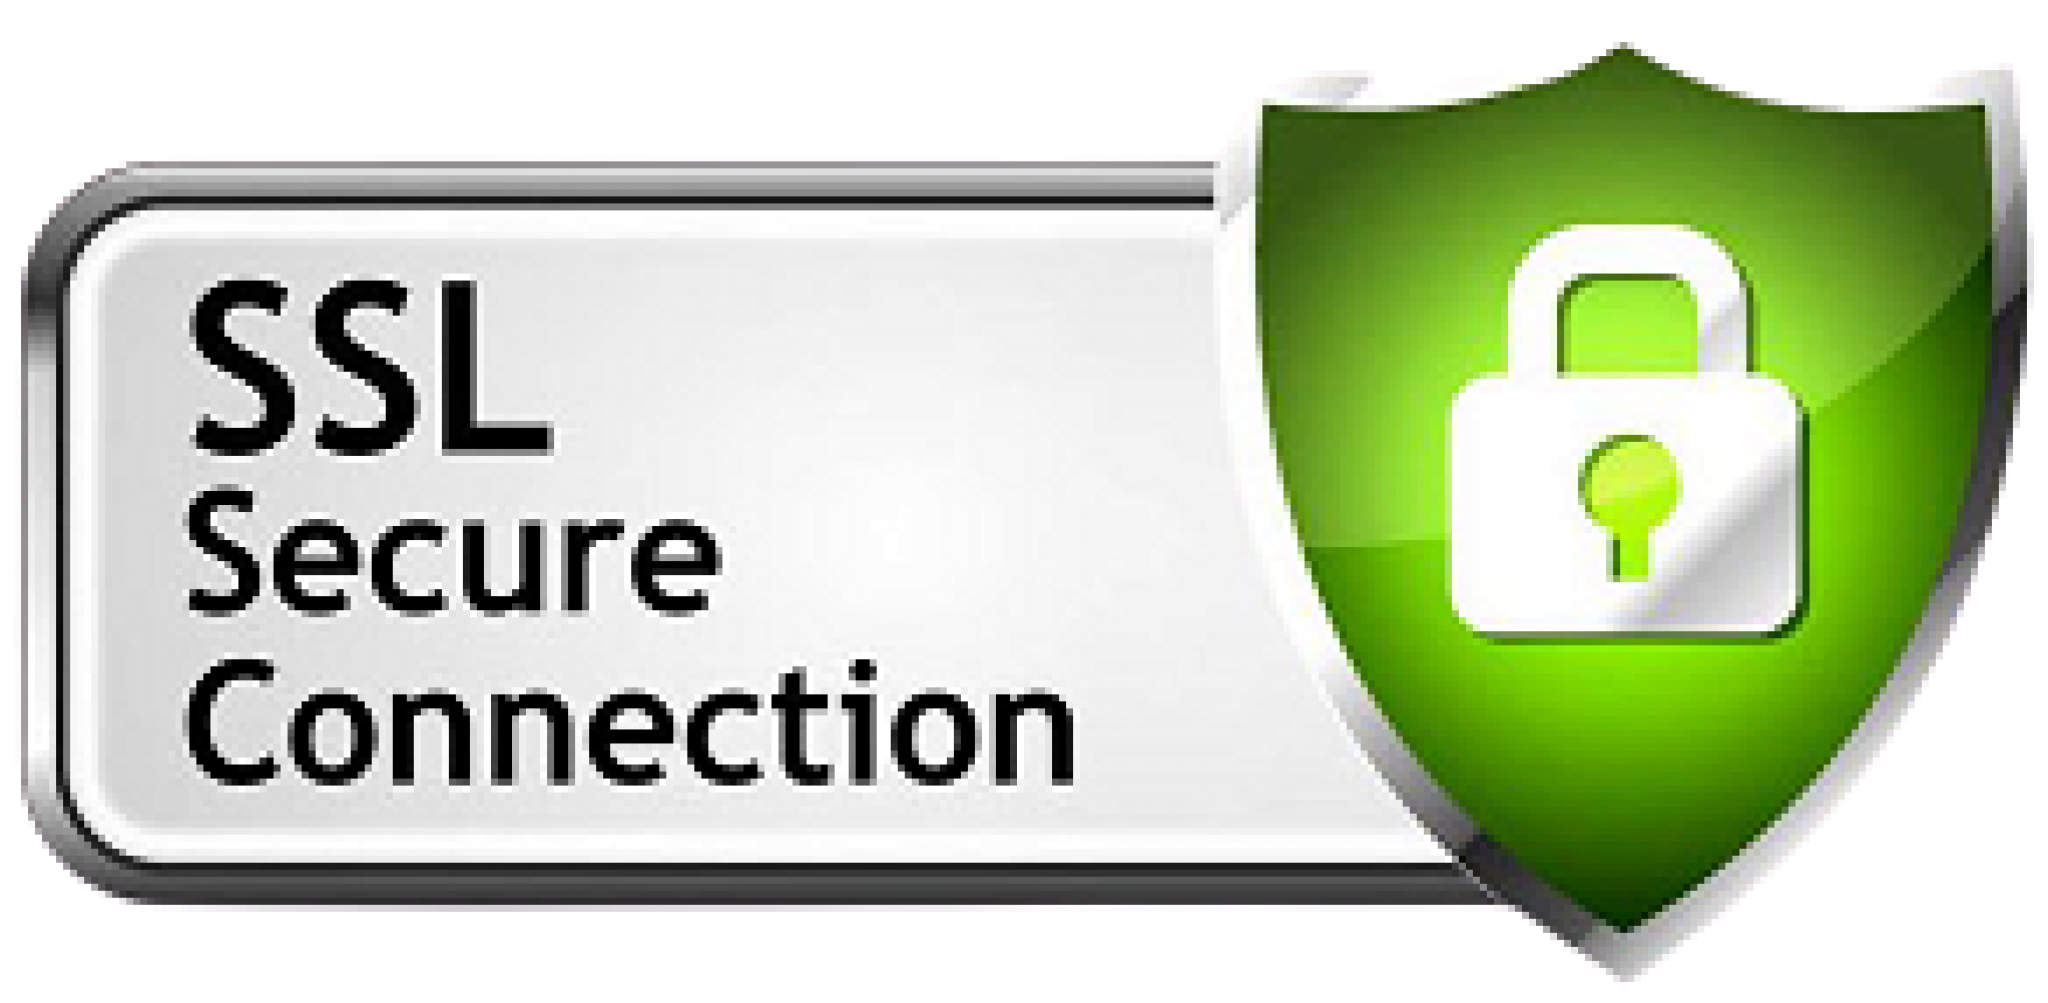 Ssl checker. SSL логотип. SSL сертификат. SSL secure. ССЛ сертификат.